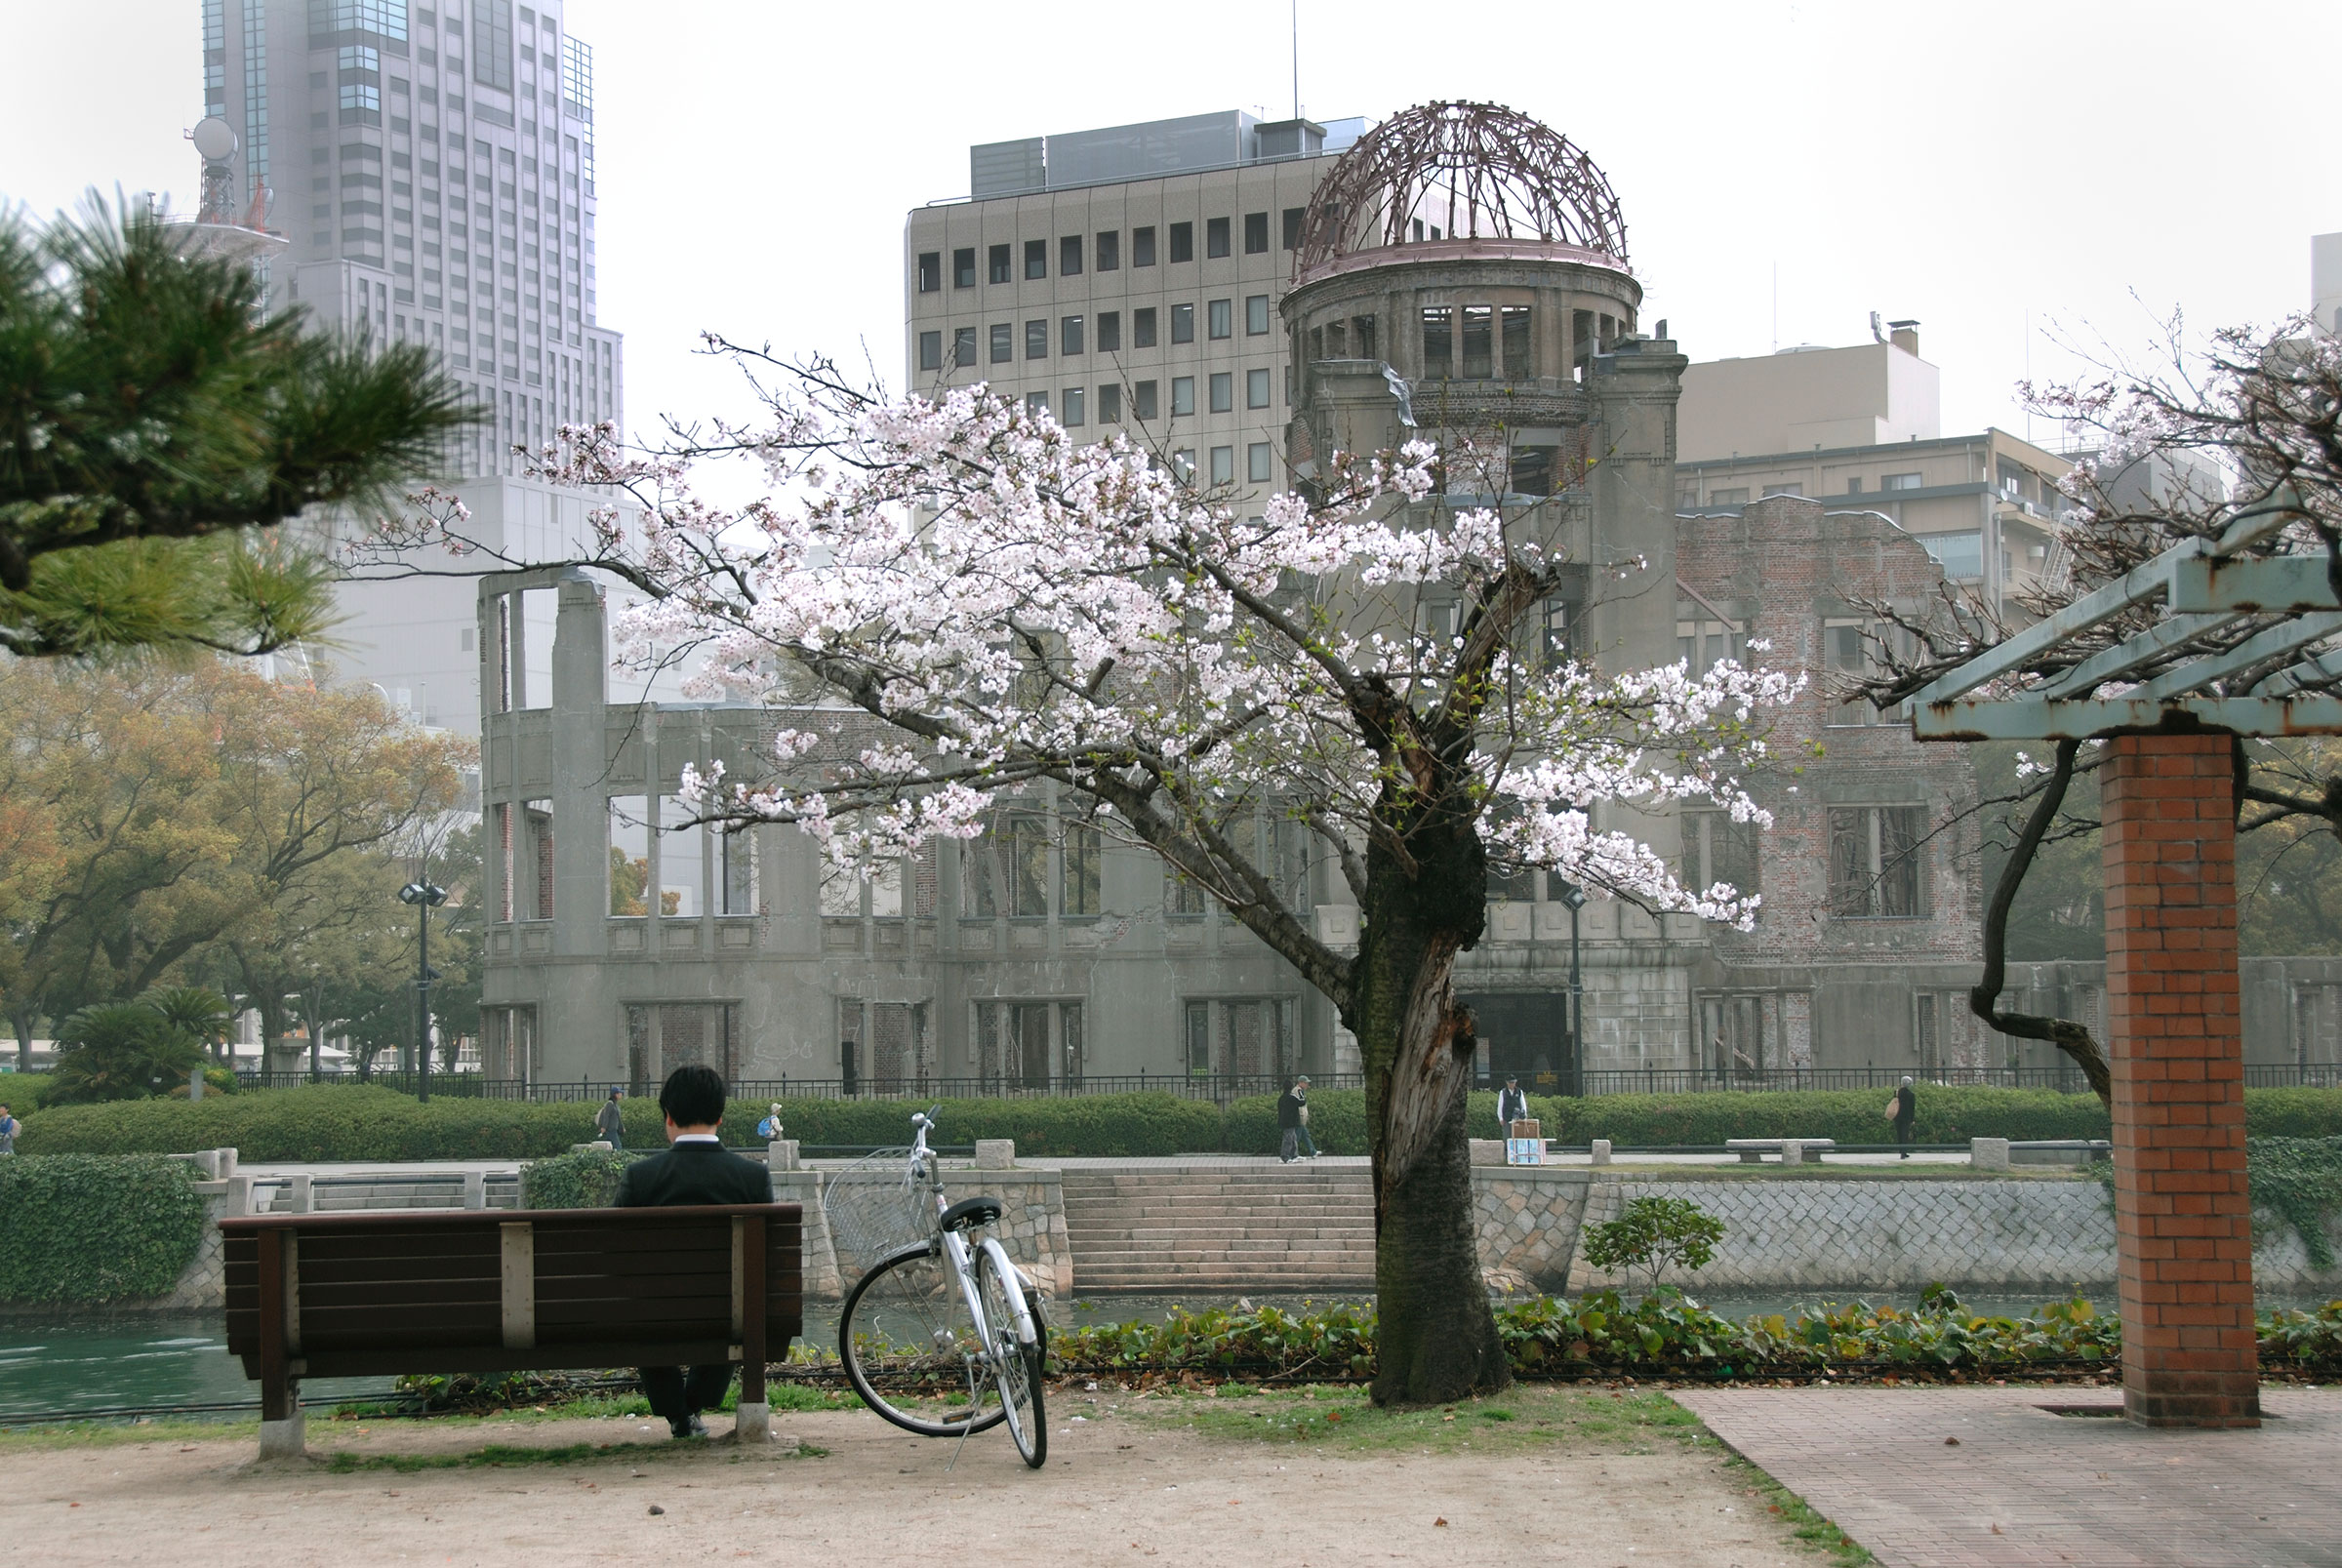 Hiroshima - Japan's Southern Islands